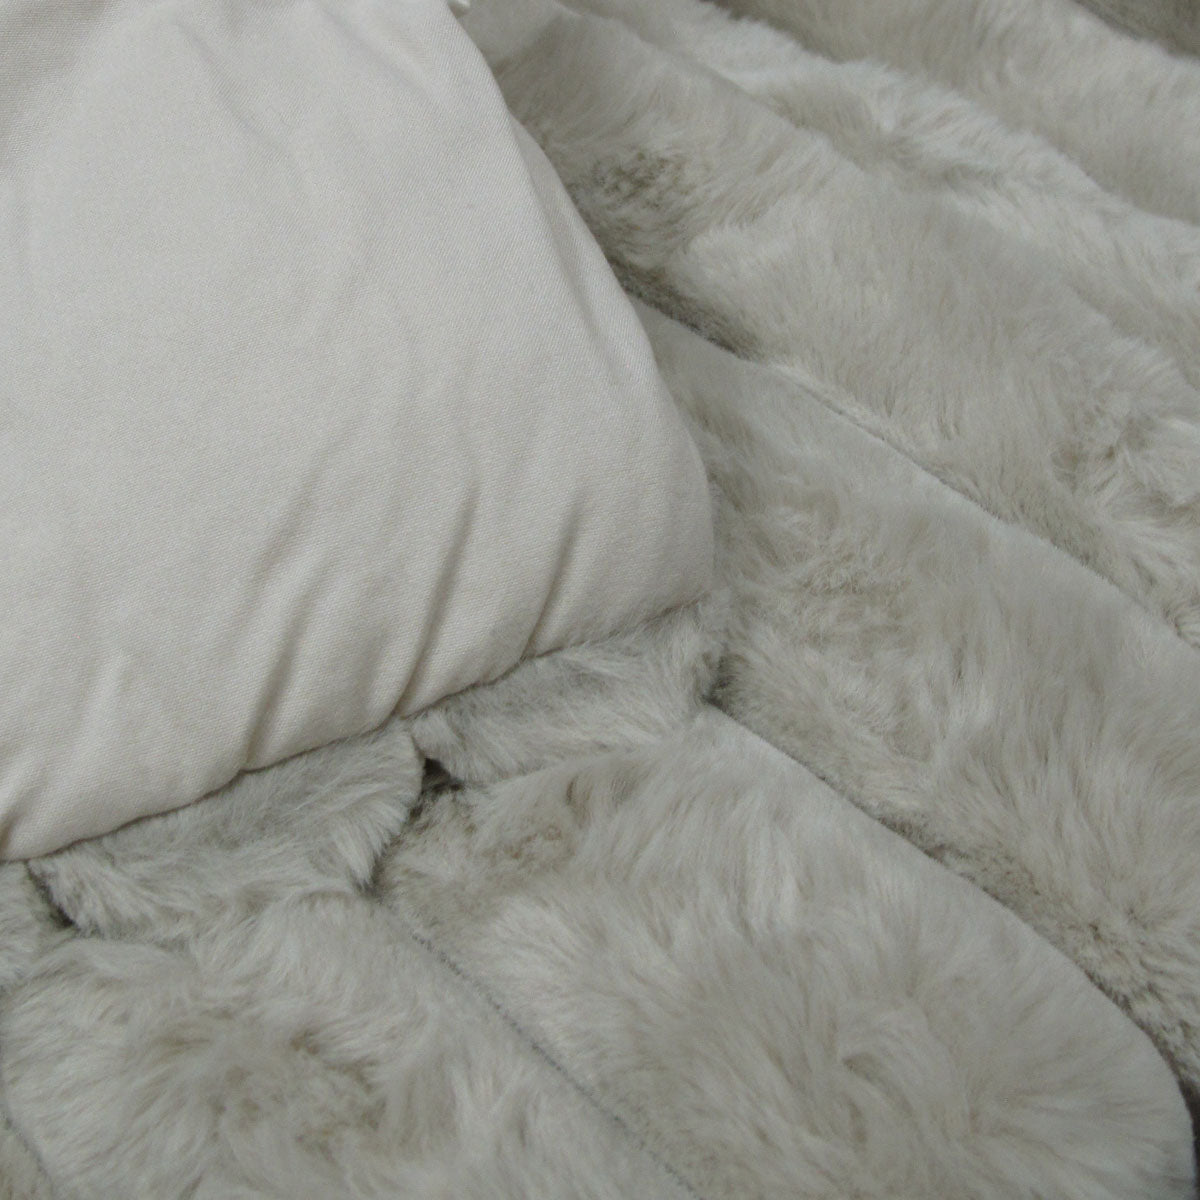 KingJane Barrin gton Arna Natural 3 Pcs Channel Faux Bunny Fur Comforter Set